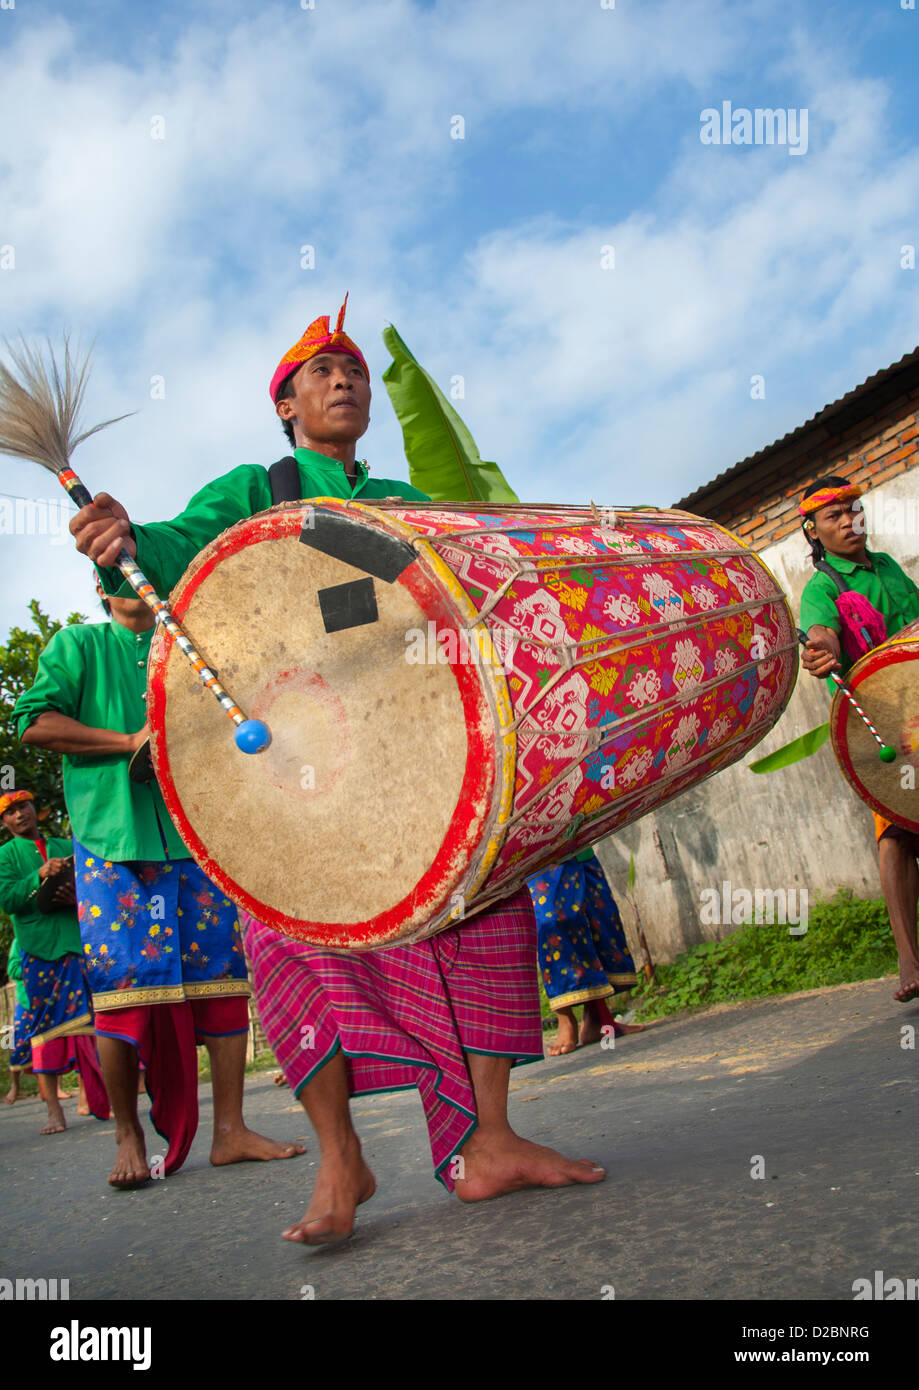 Man Banging A Huge Drum During A Wedding Parade, Mataram, Lombok Island, Indonesia Stock Photo